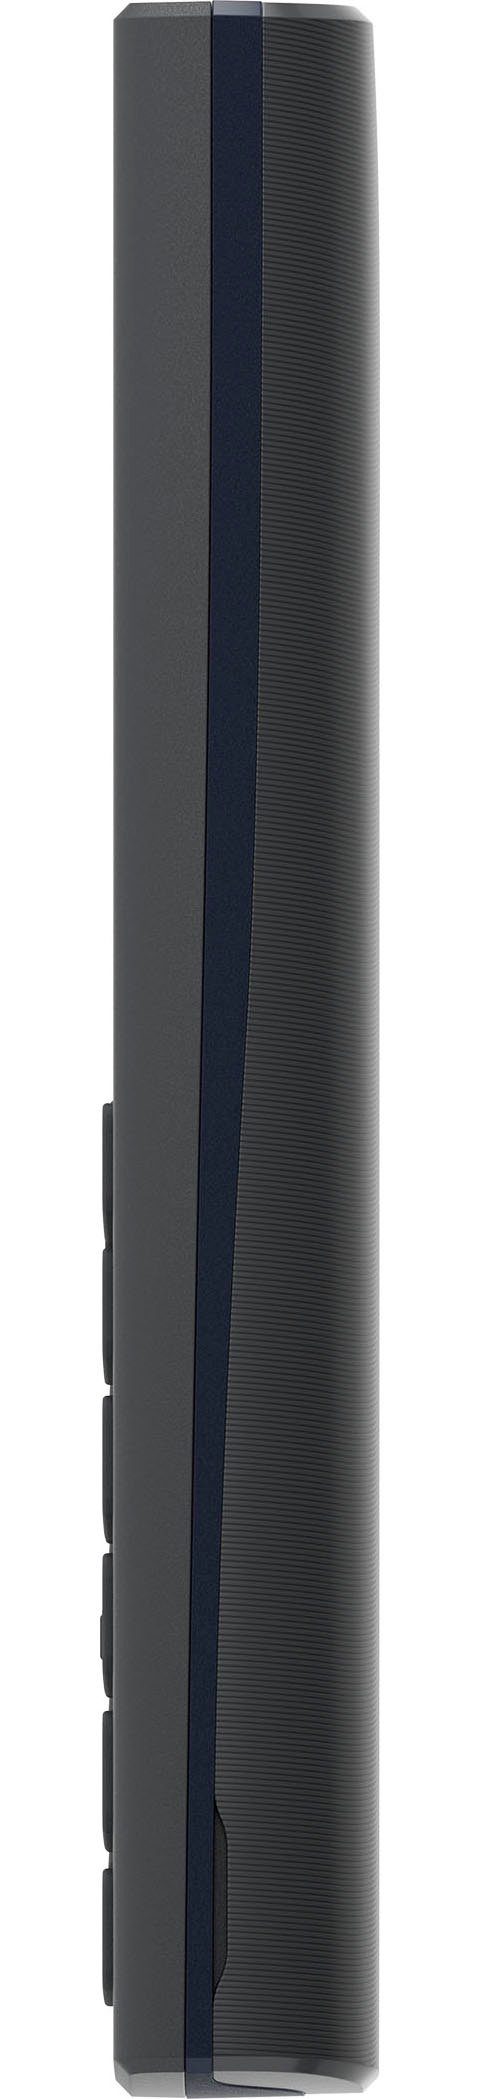 Nokia 105 Edition 2023 Smartphone (4,5 Zoll) cm/1,77